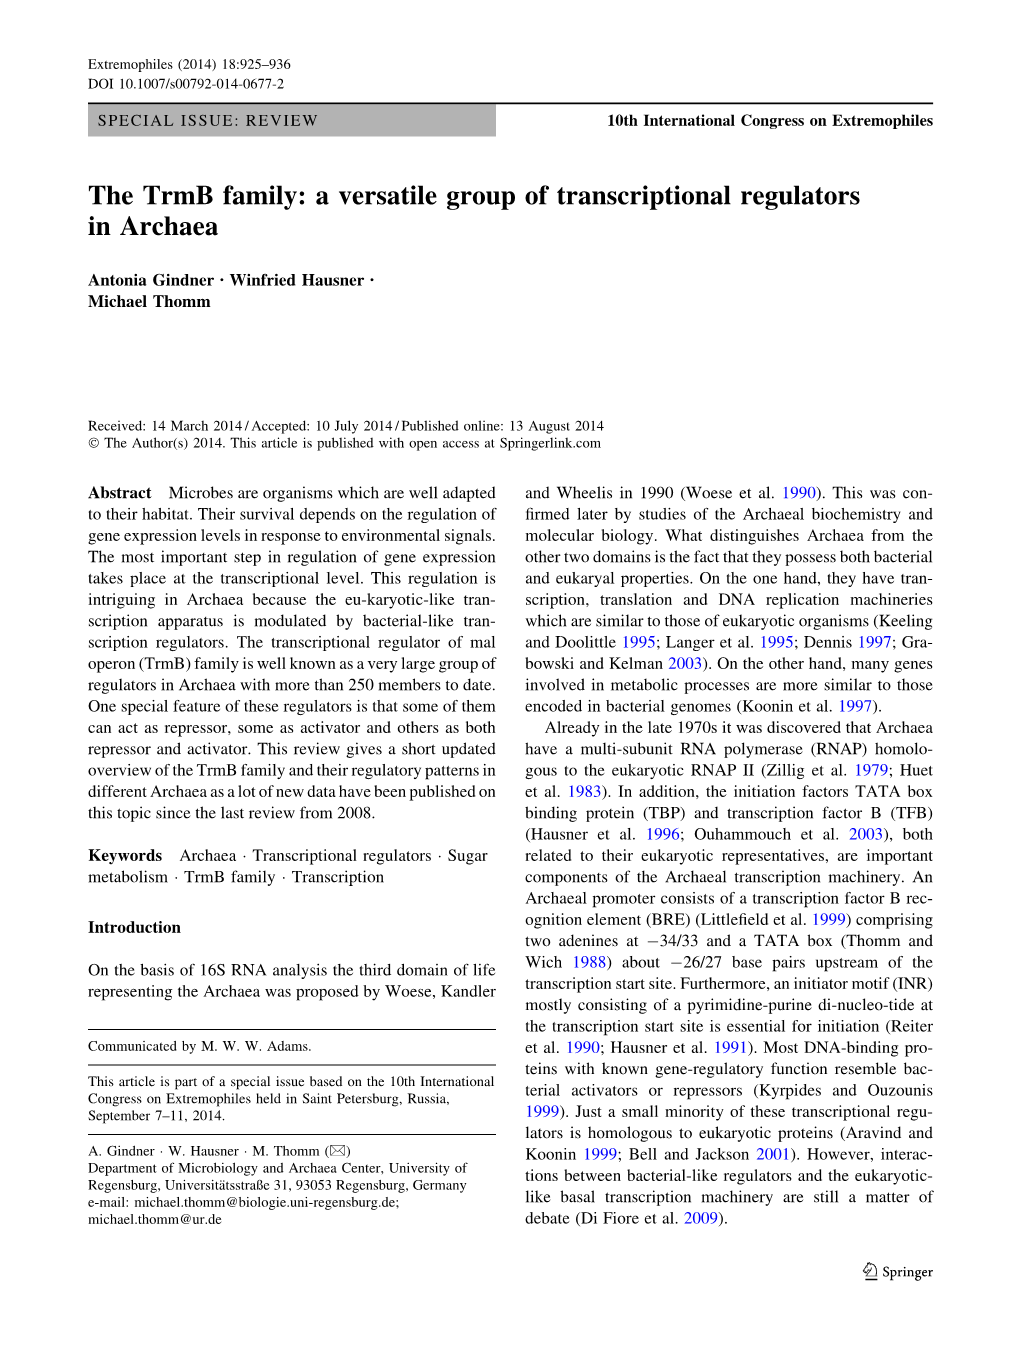 A Versatile Group of Transcriptional Regulators in Archaea